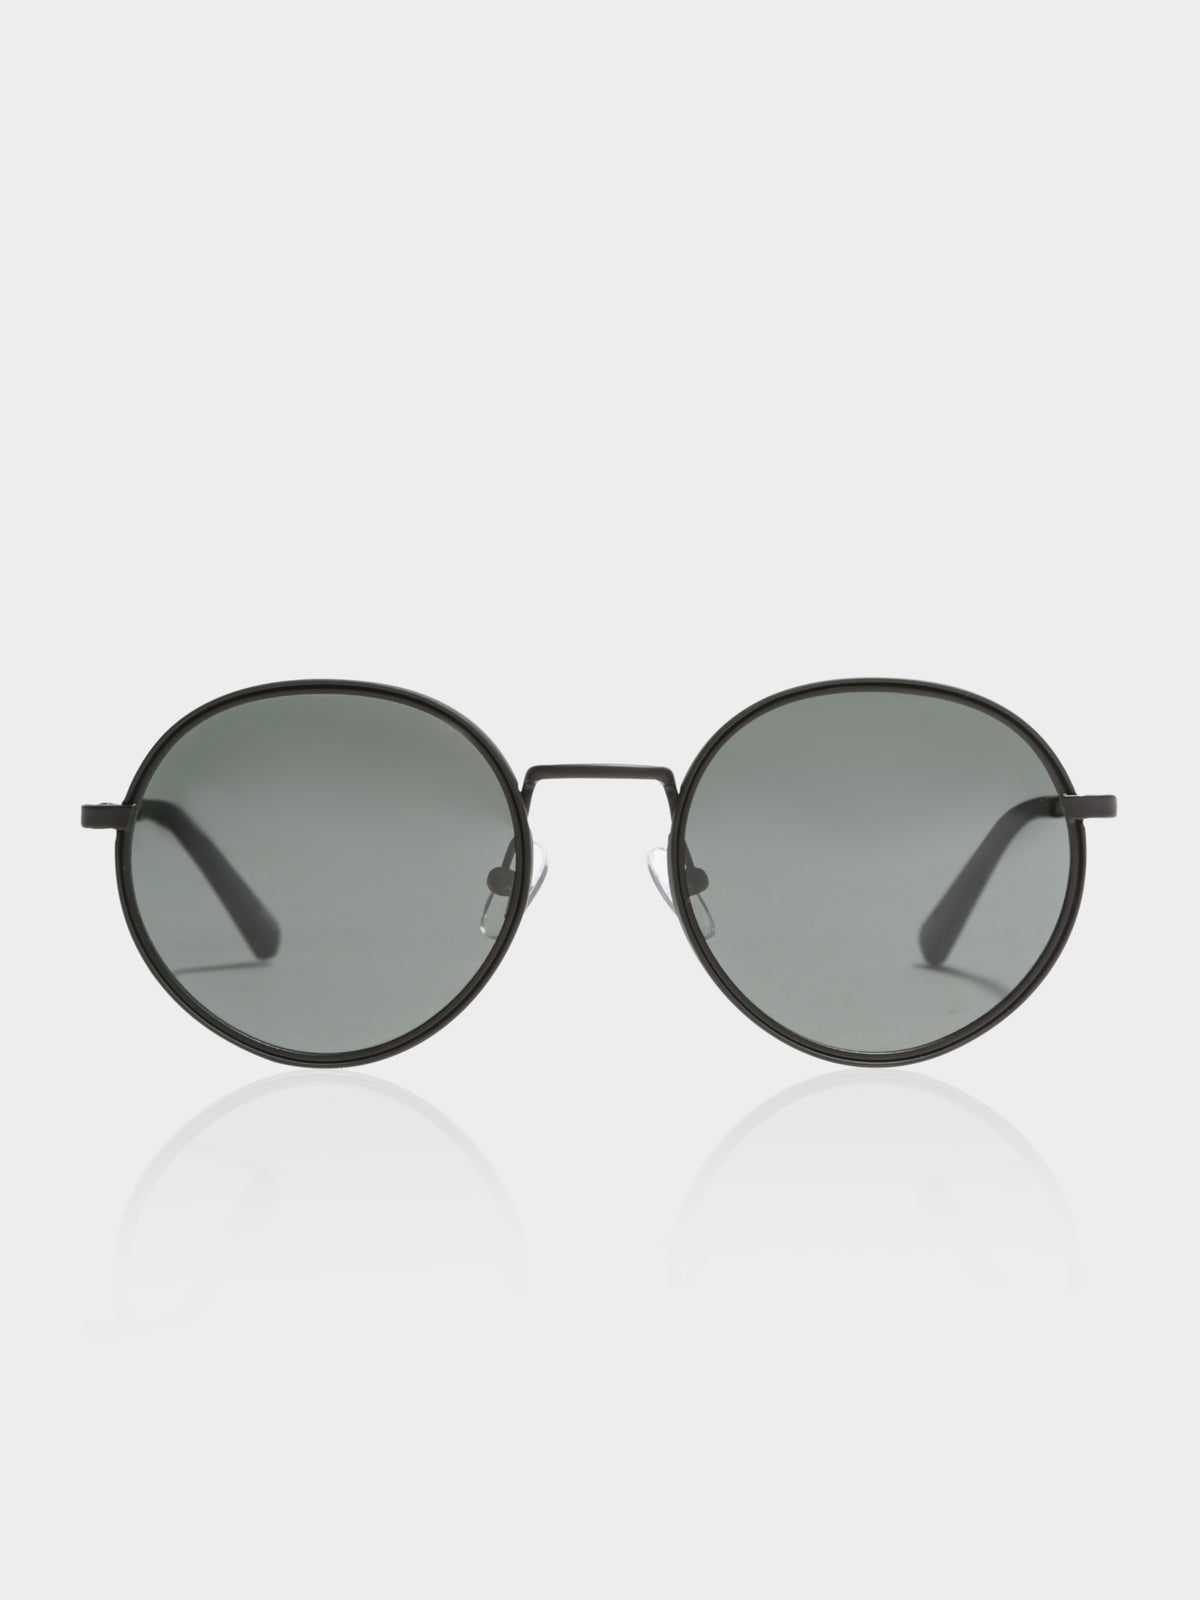 Par Polarized Sunglasses in Matt Black